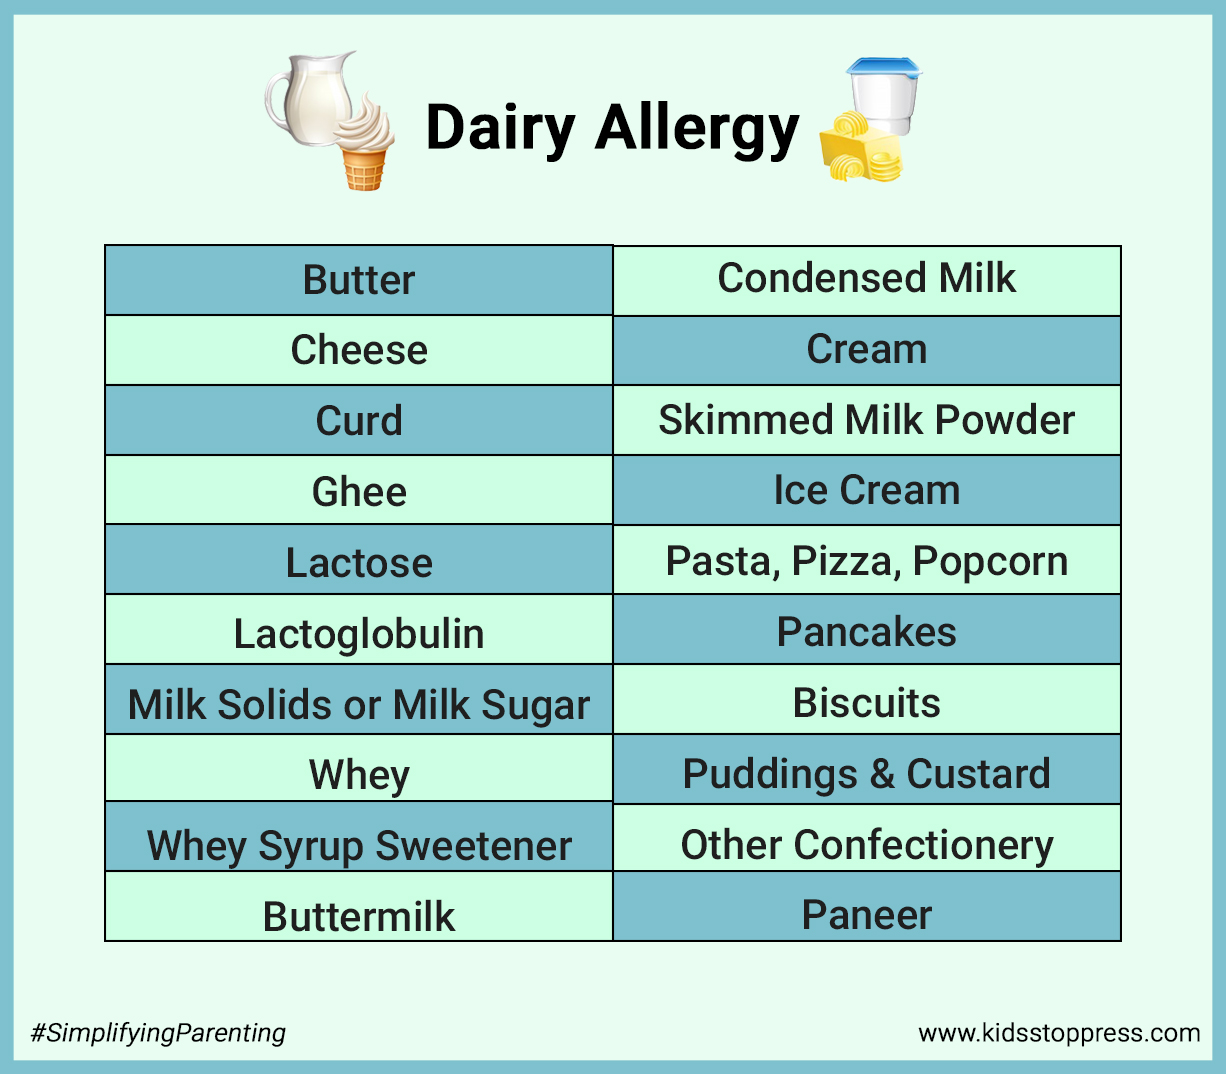 Dairy Allergy In Kids_Kidsstoppress